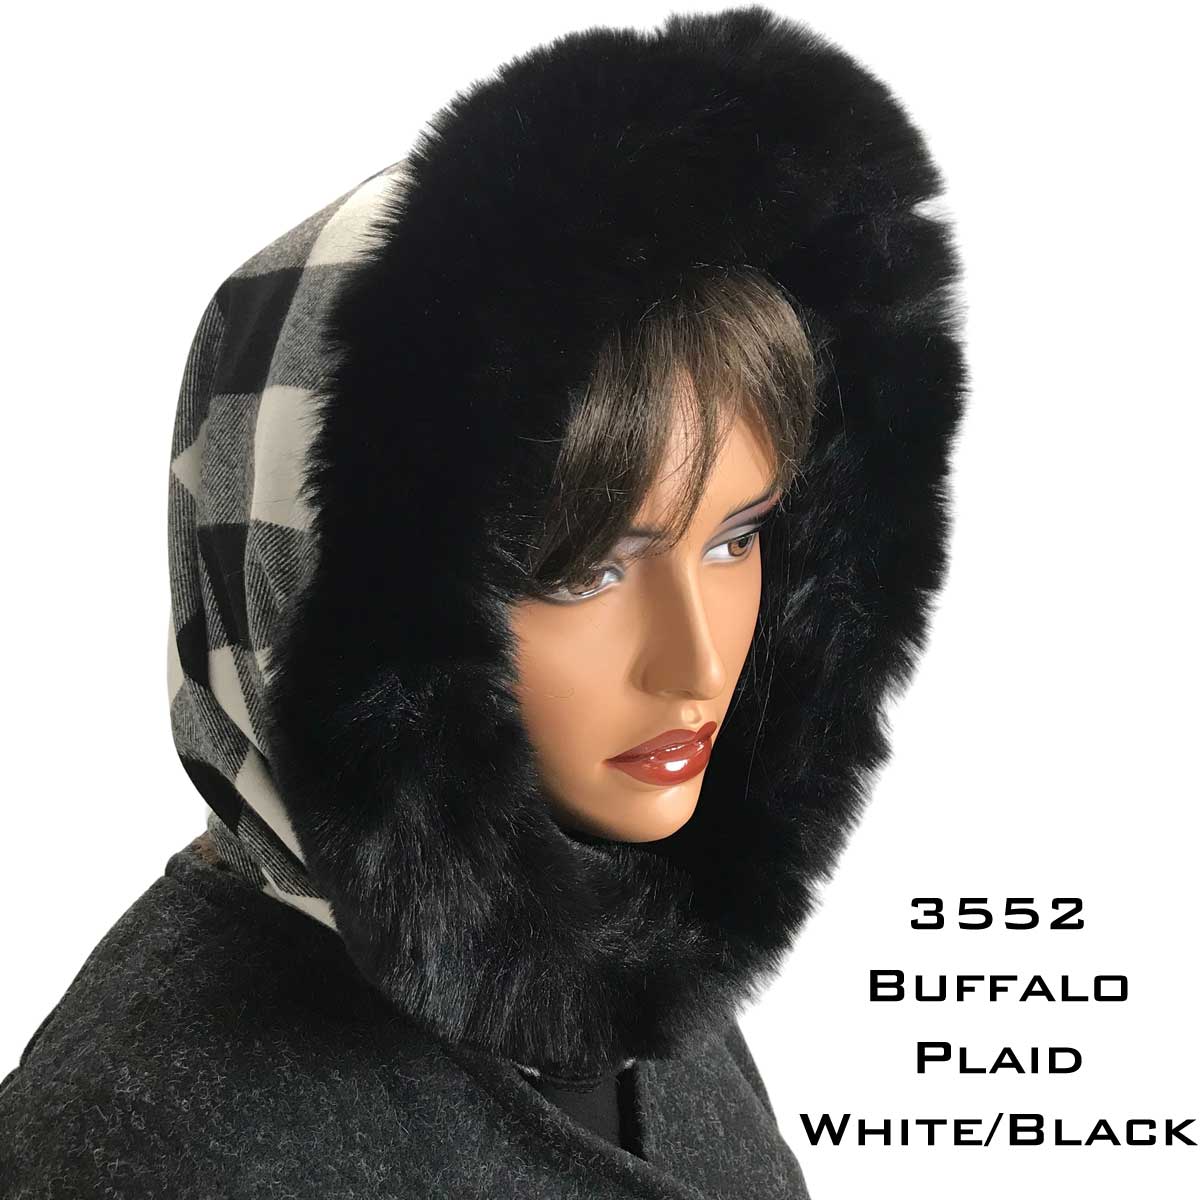 3552 BUFFALO PLAID WHITE/BLACK Fur Trimmed Infinity Hood